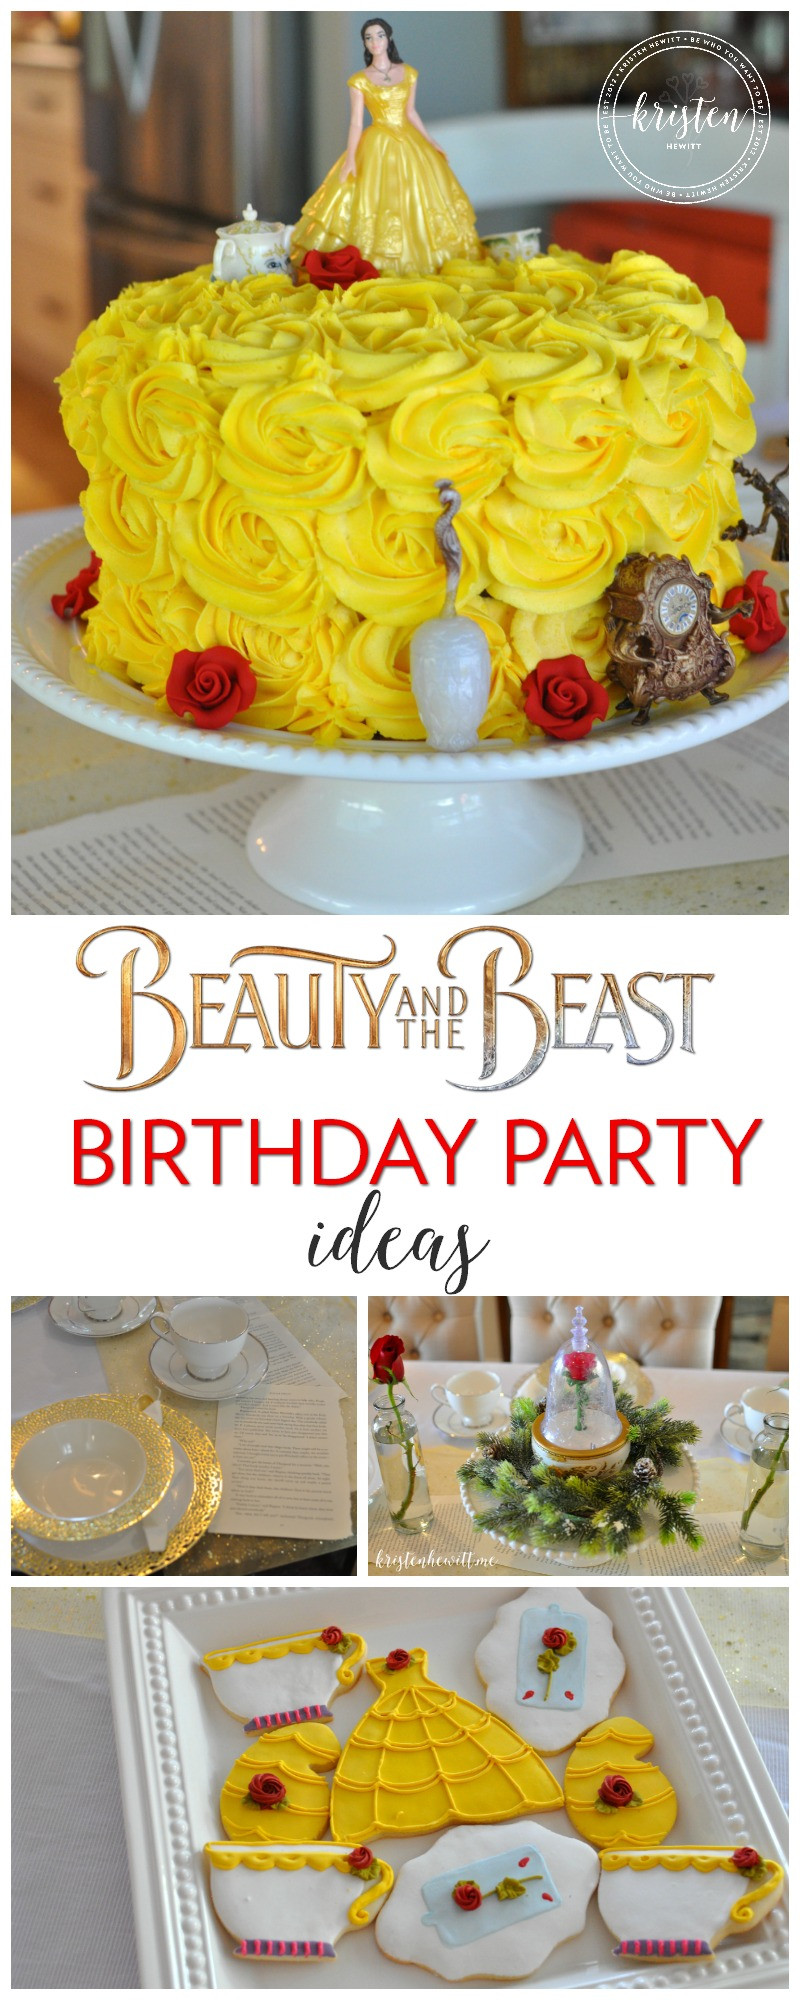 Best ideas about Beauty And The Beast Birthday Ideas
. Save or Pin Beauty and the Beast Birthday Party Ideas Kristen Hewitt Now.